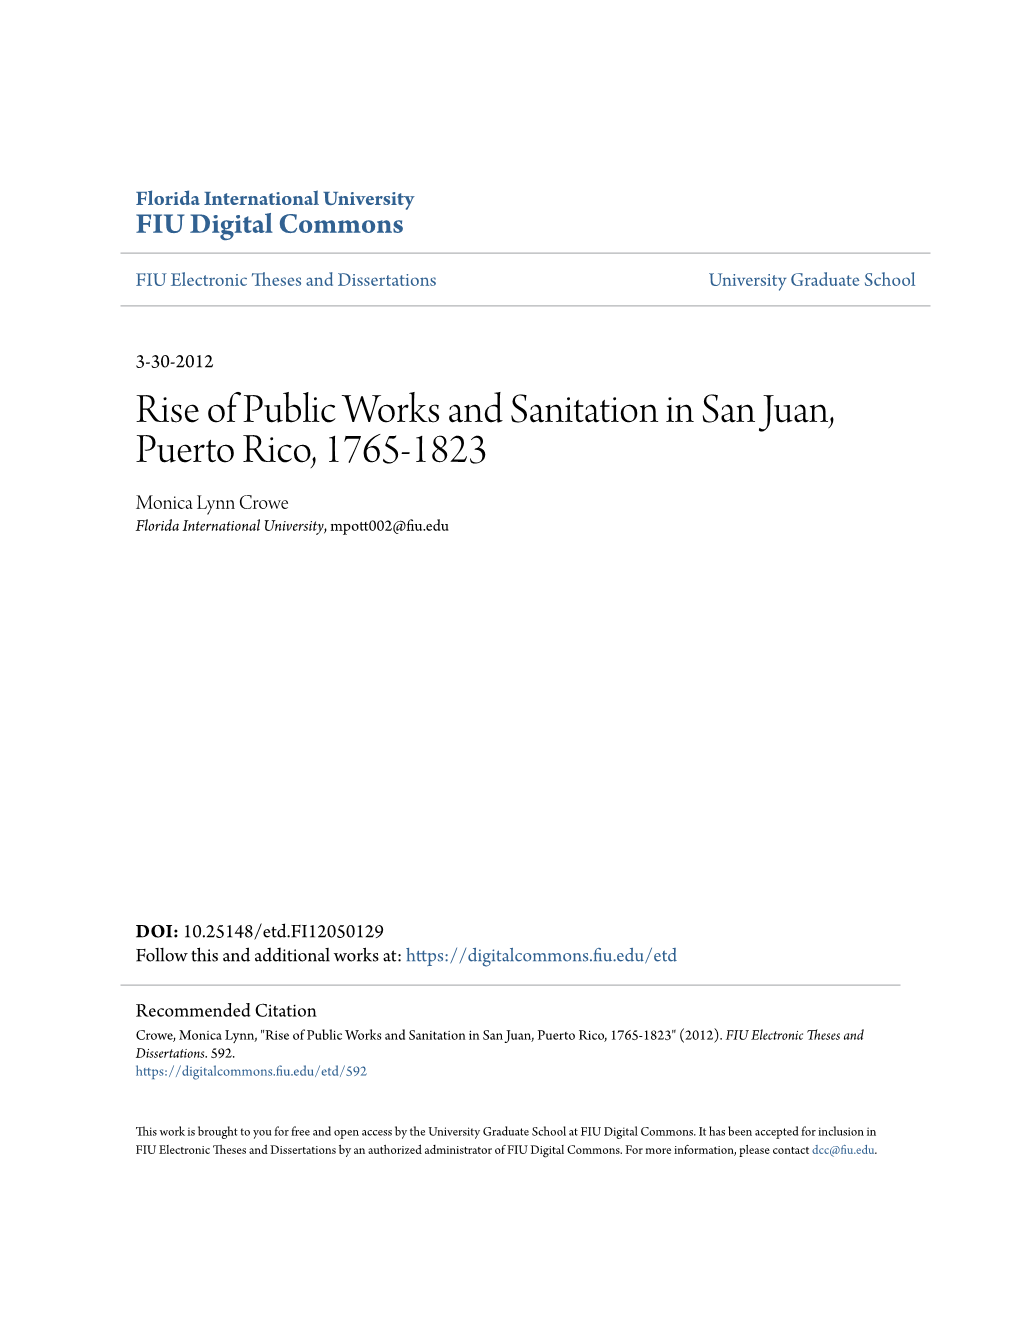 Rise of Public Works and Sanitation in San Juan, Puerto Rico, 1765-1823 Monica Lynn Crowe Florida International University, Mpott002@Fiu.Edu